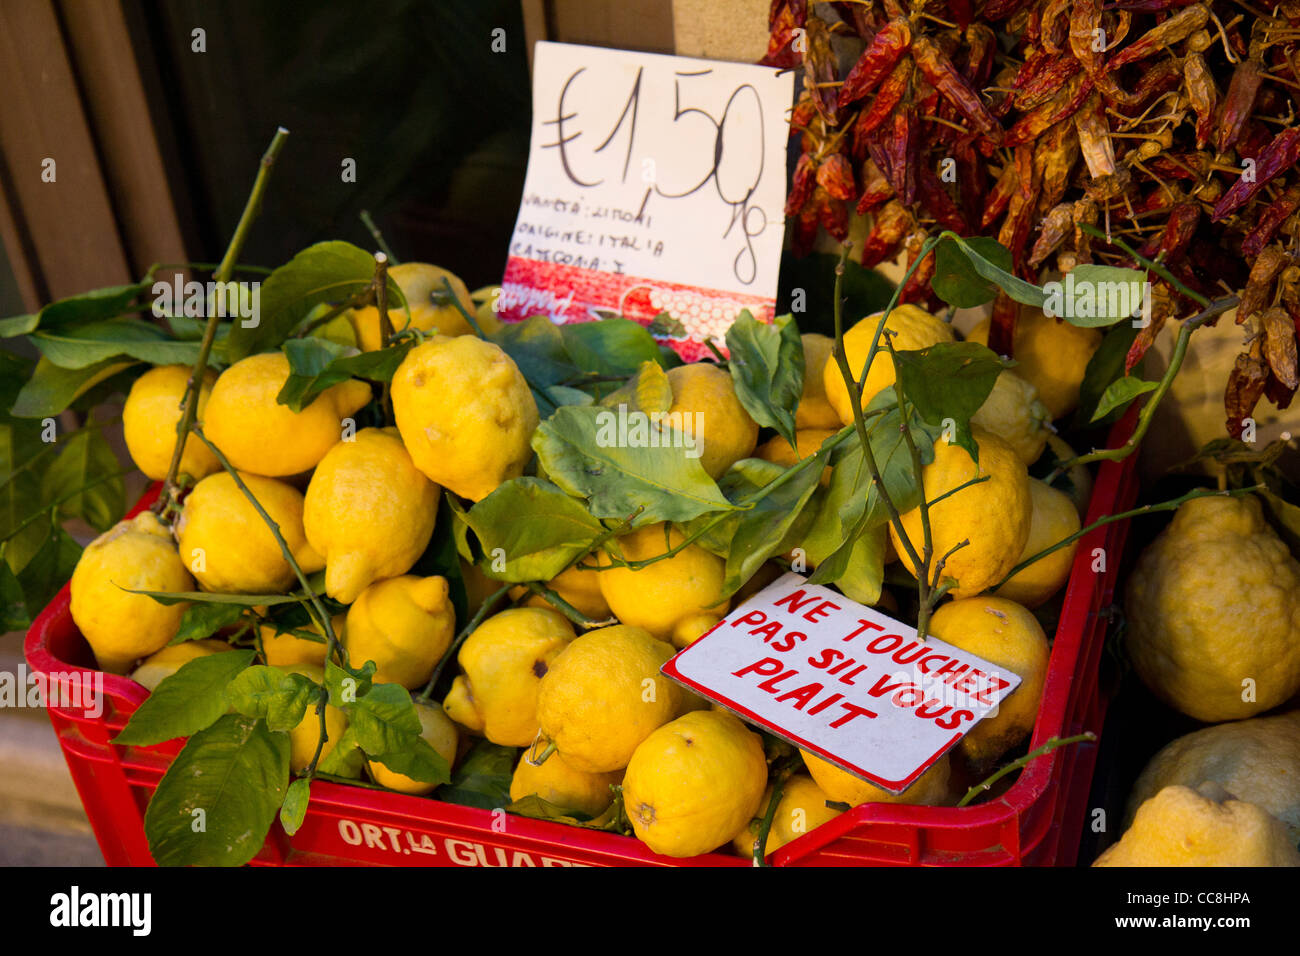 Lemons on sale in Amalfi, Italy Stock Photo